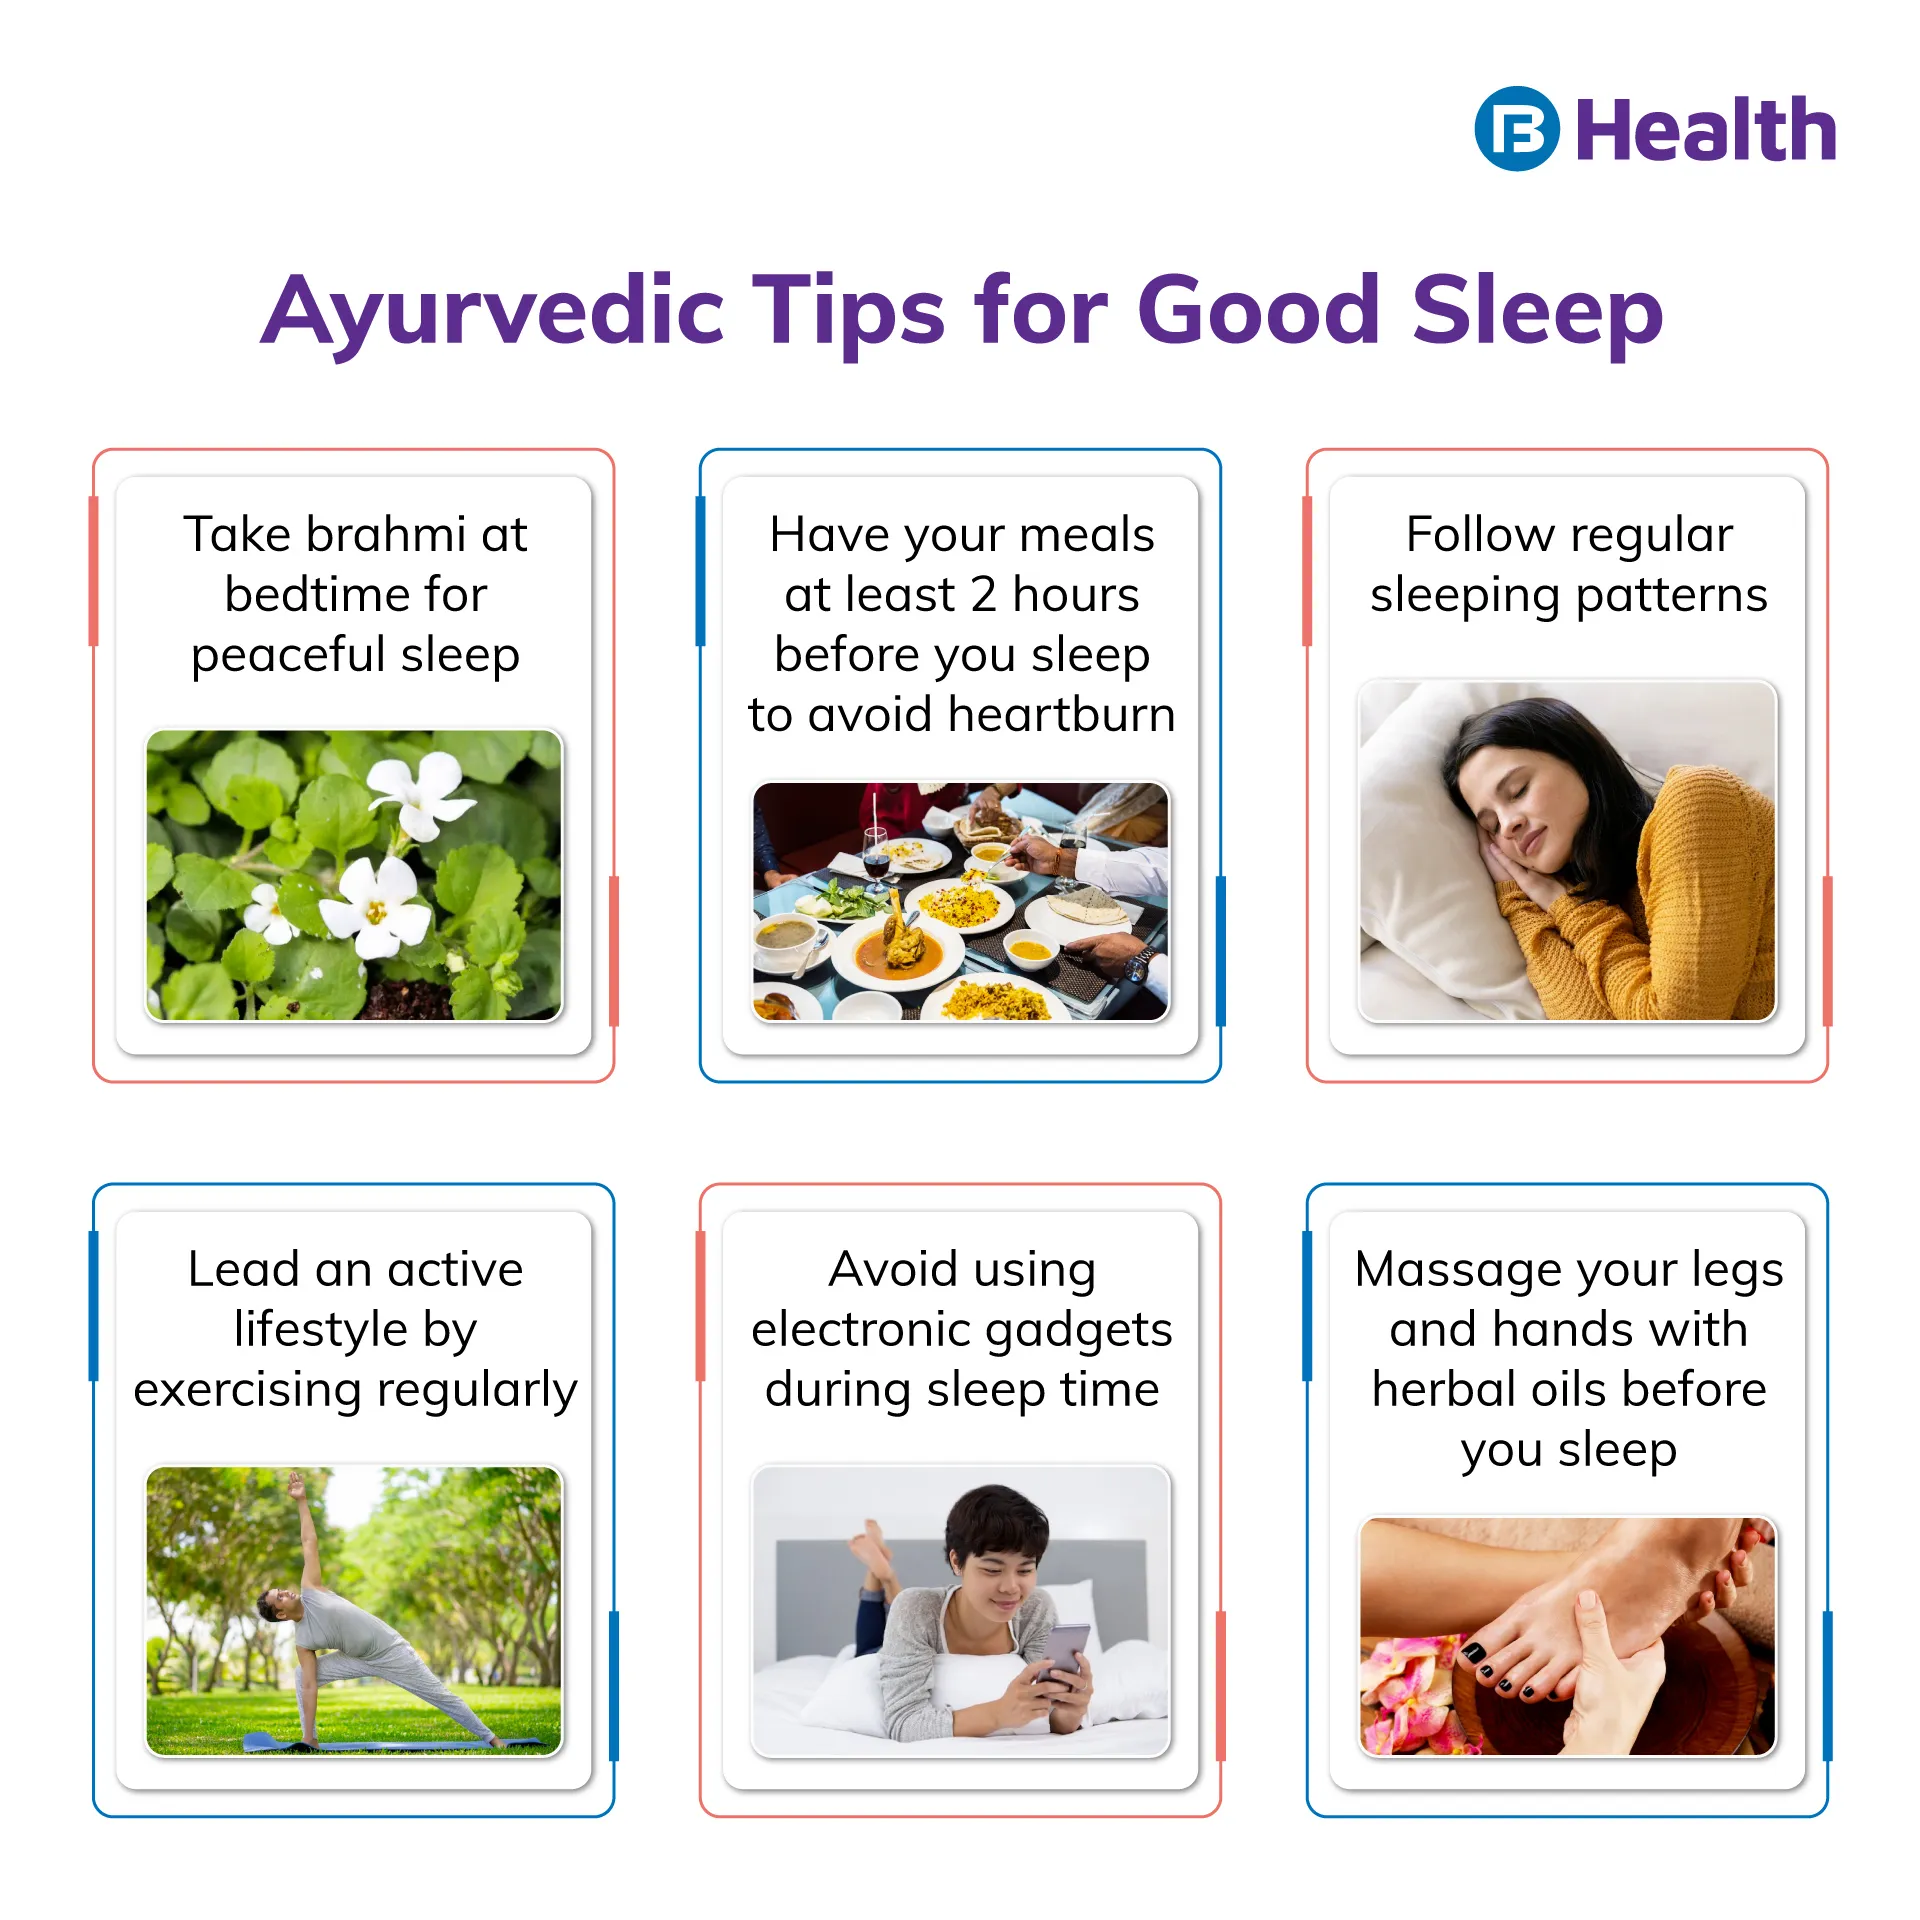 Ayurvedic tips for good sleep